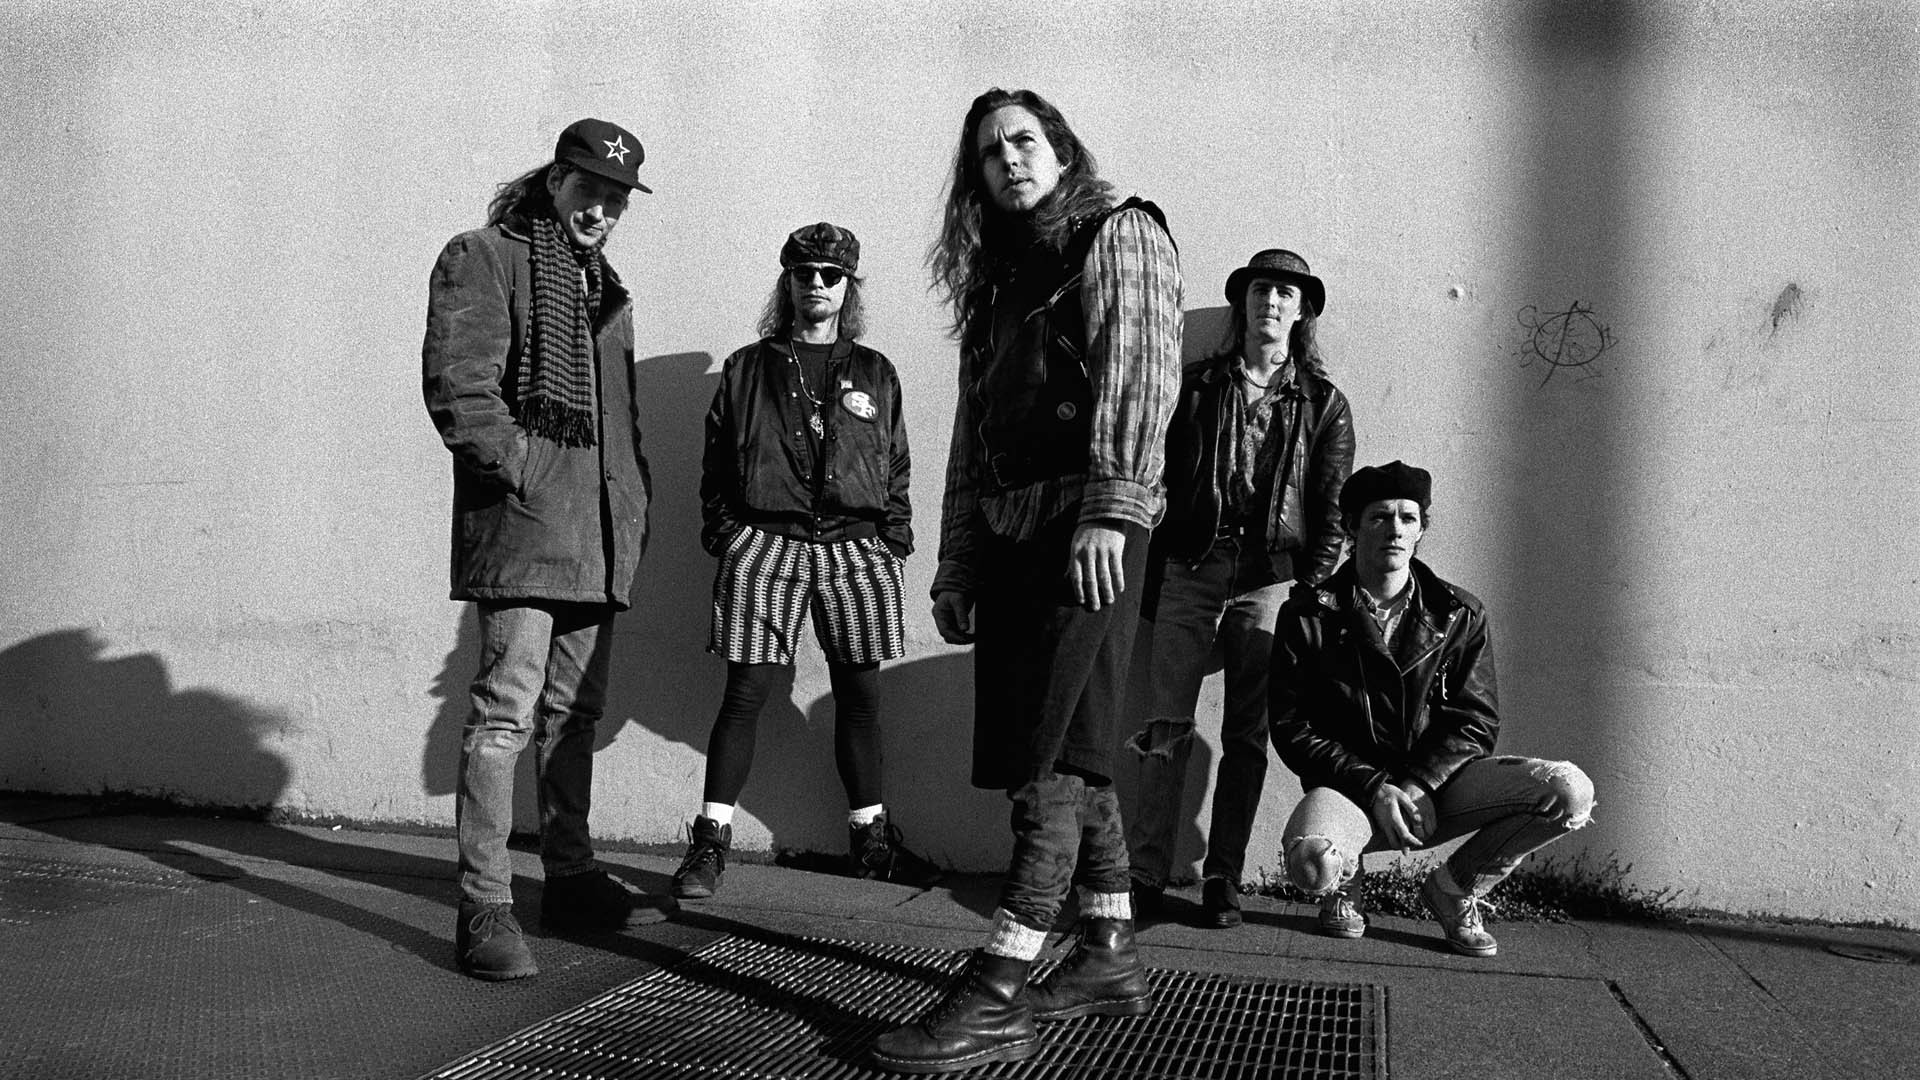 People 1920x1080 men musician rockstar grunge Seattle monochrome long hair street wall shadow rock bands 1990s Doc Martens Pearl Jam Eddie Vedder shorts